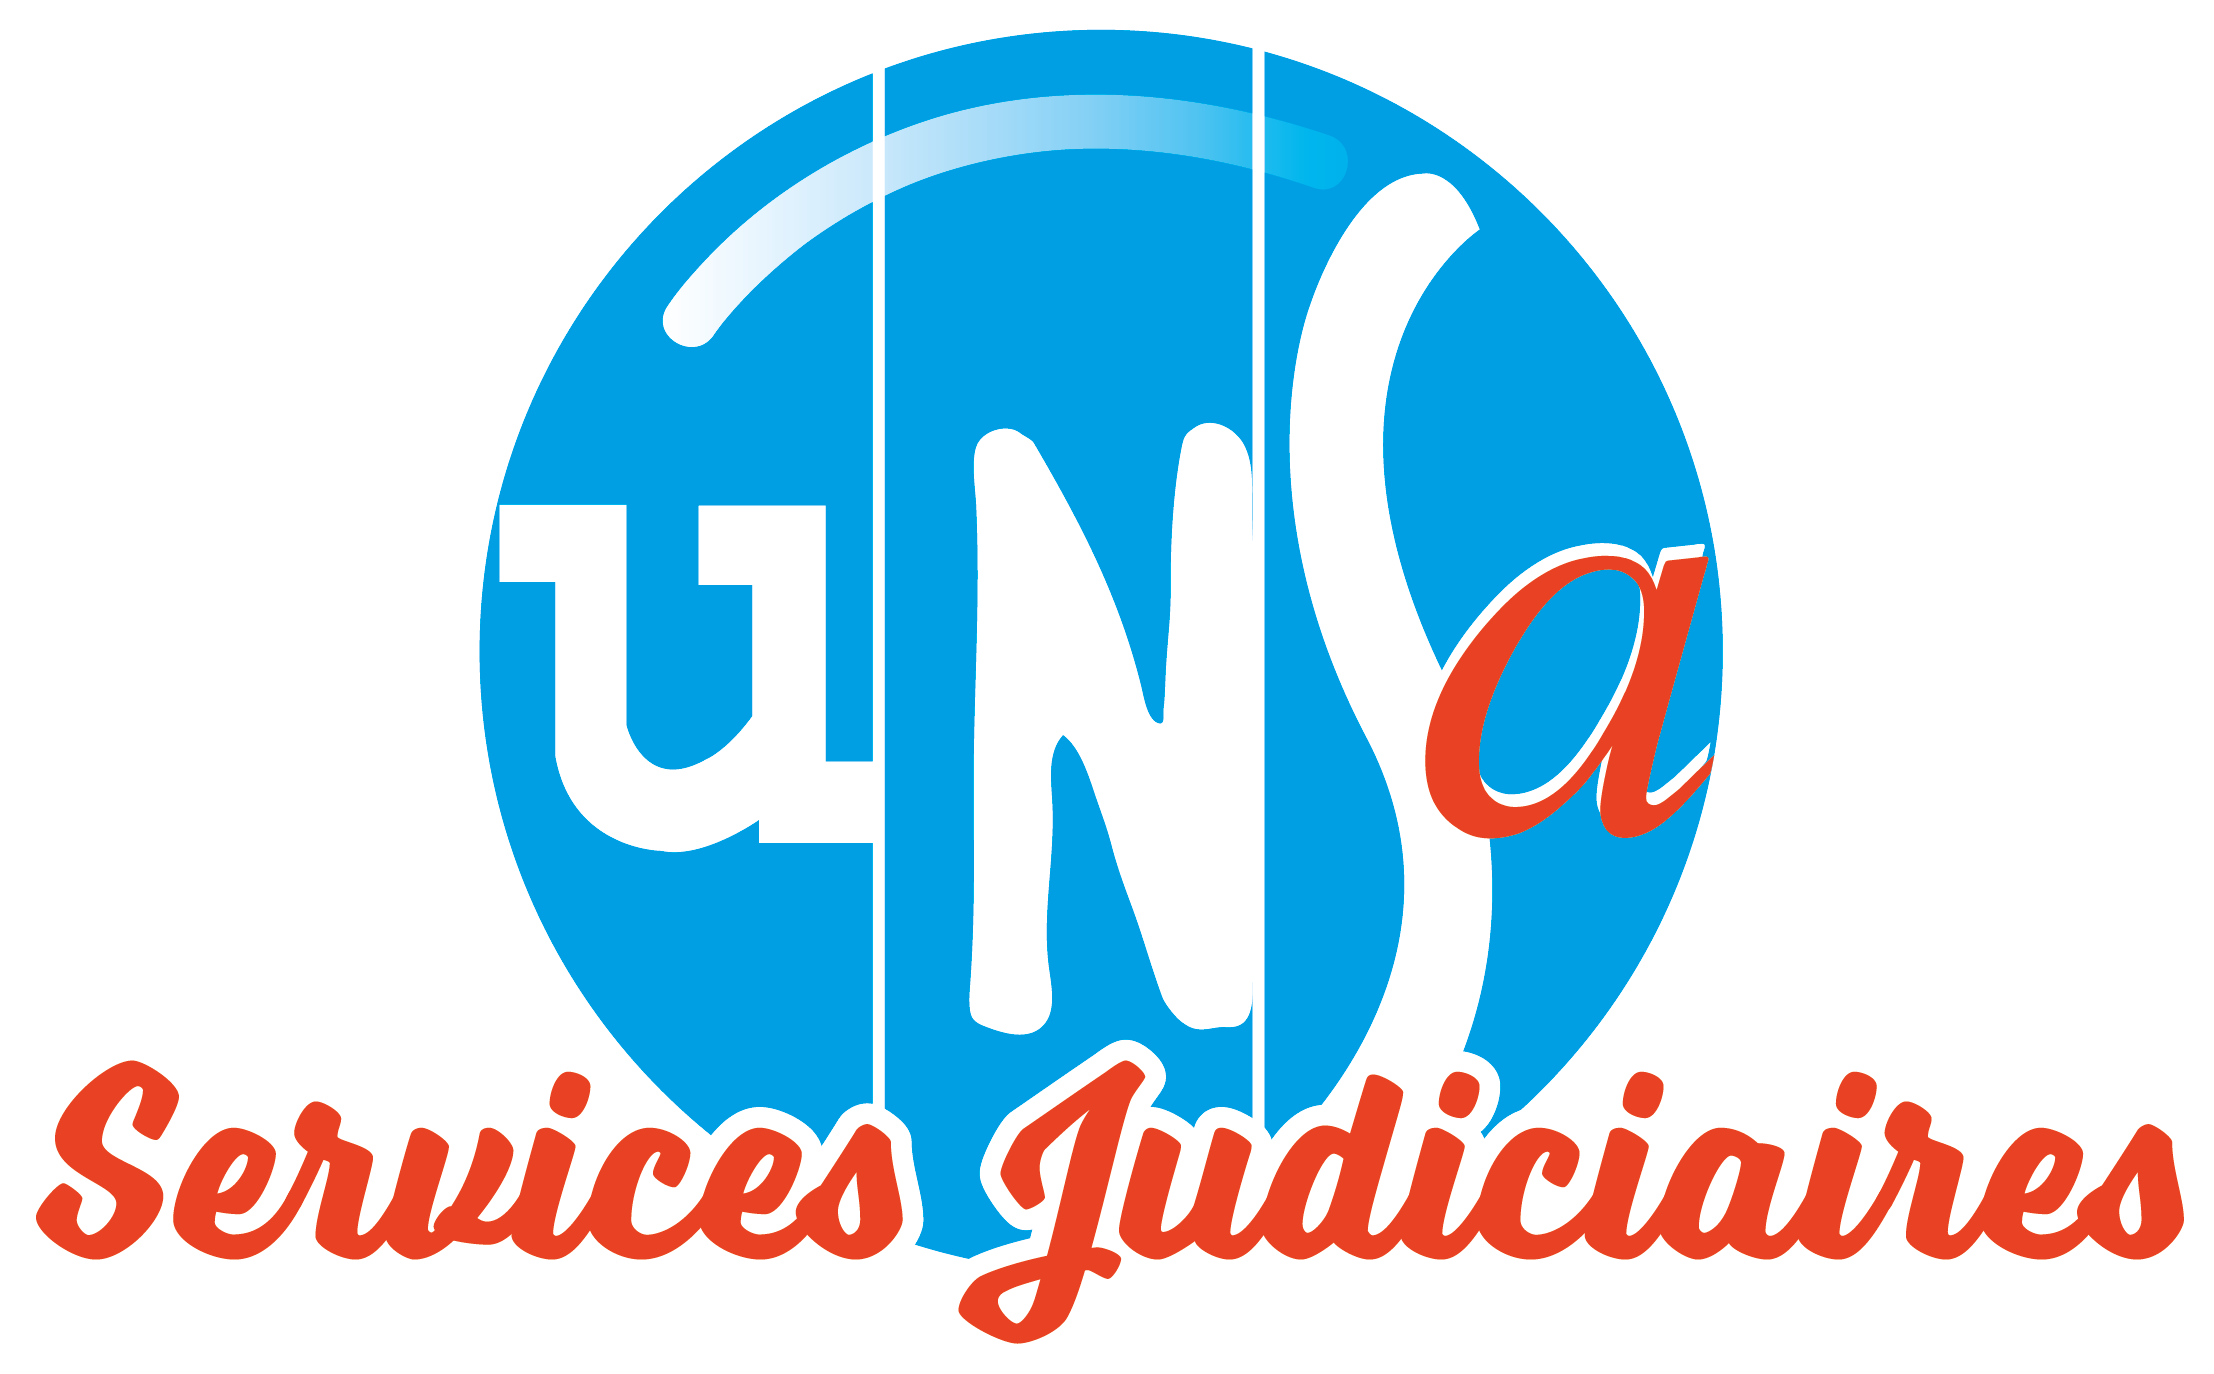 Unsa Services Judiciaires